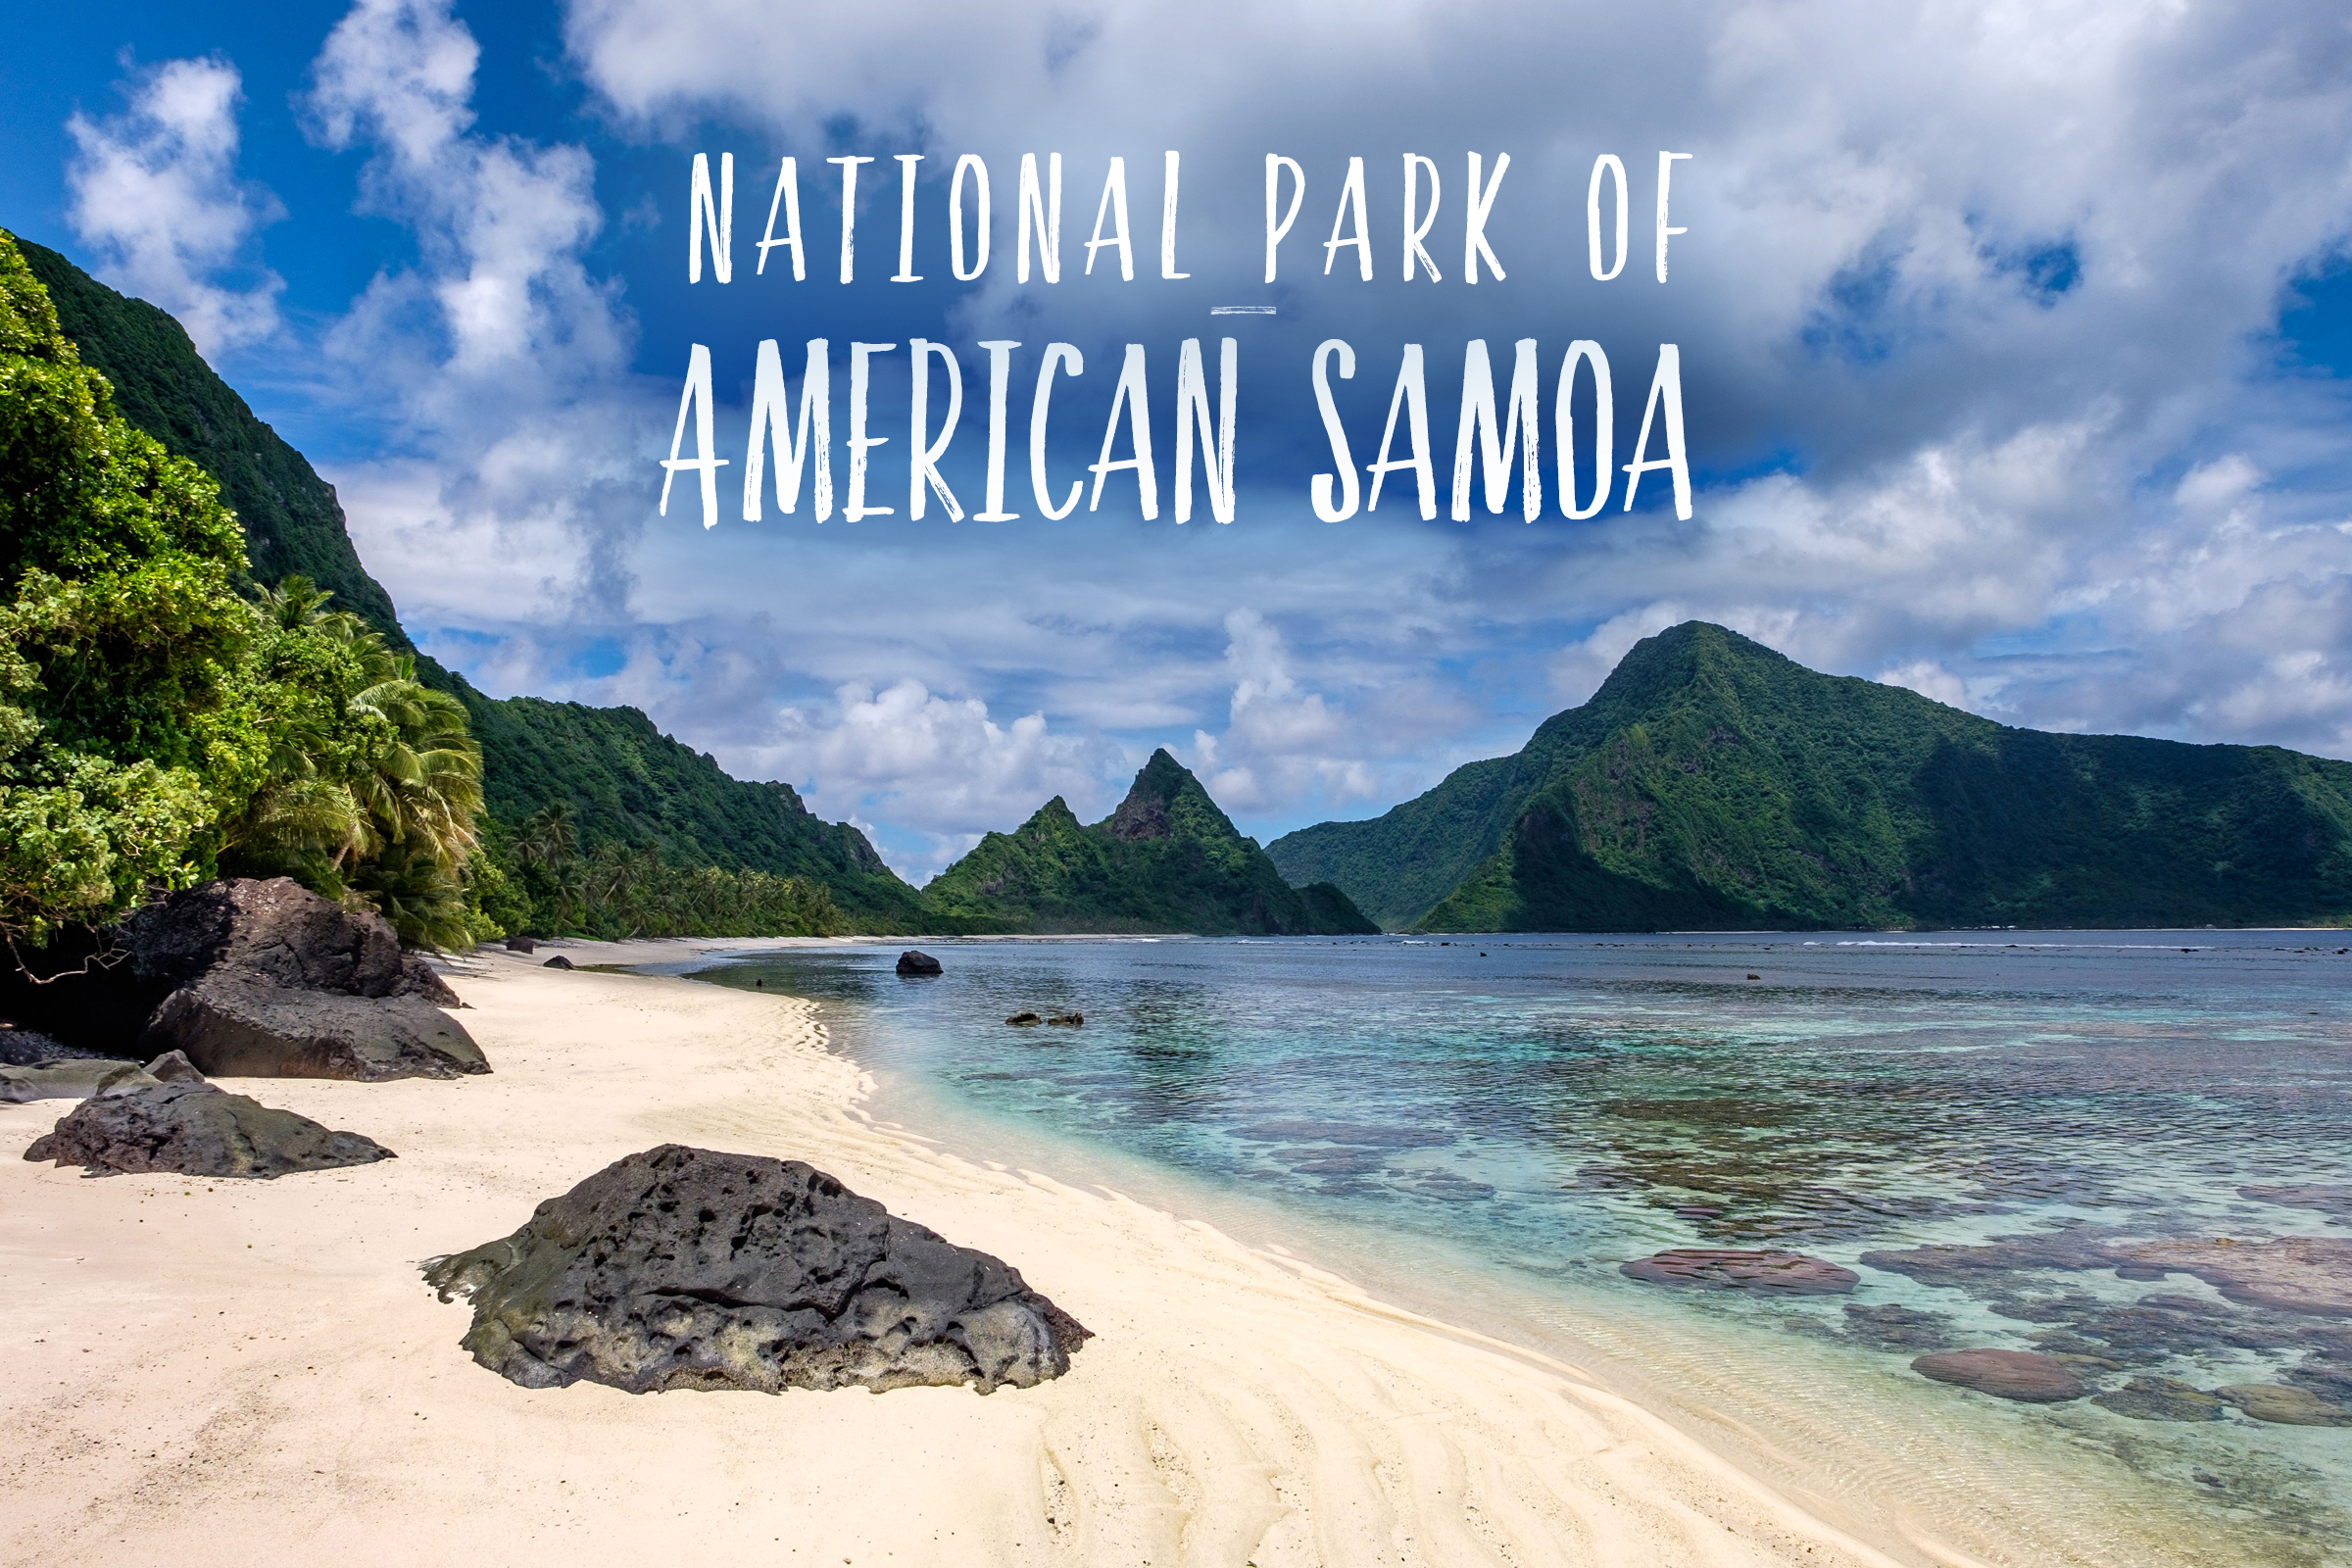 Park 56/59: the National Park of American Samoa